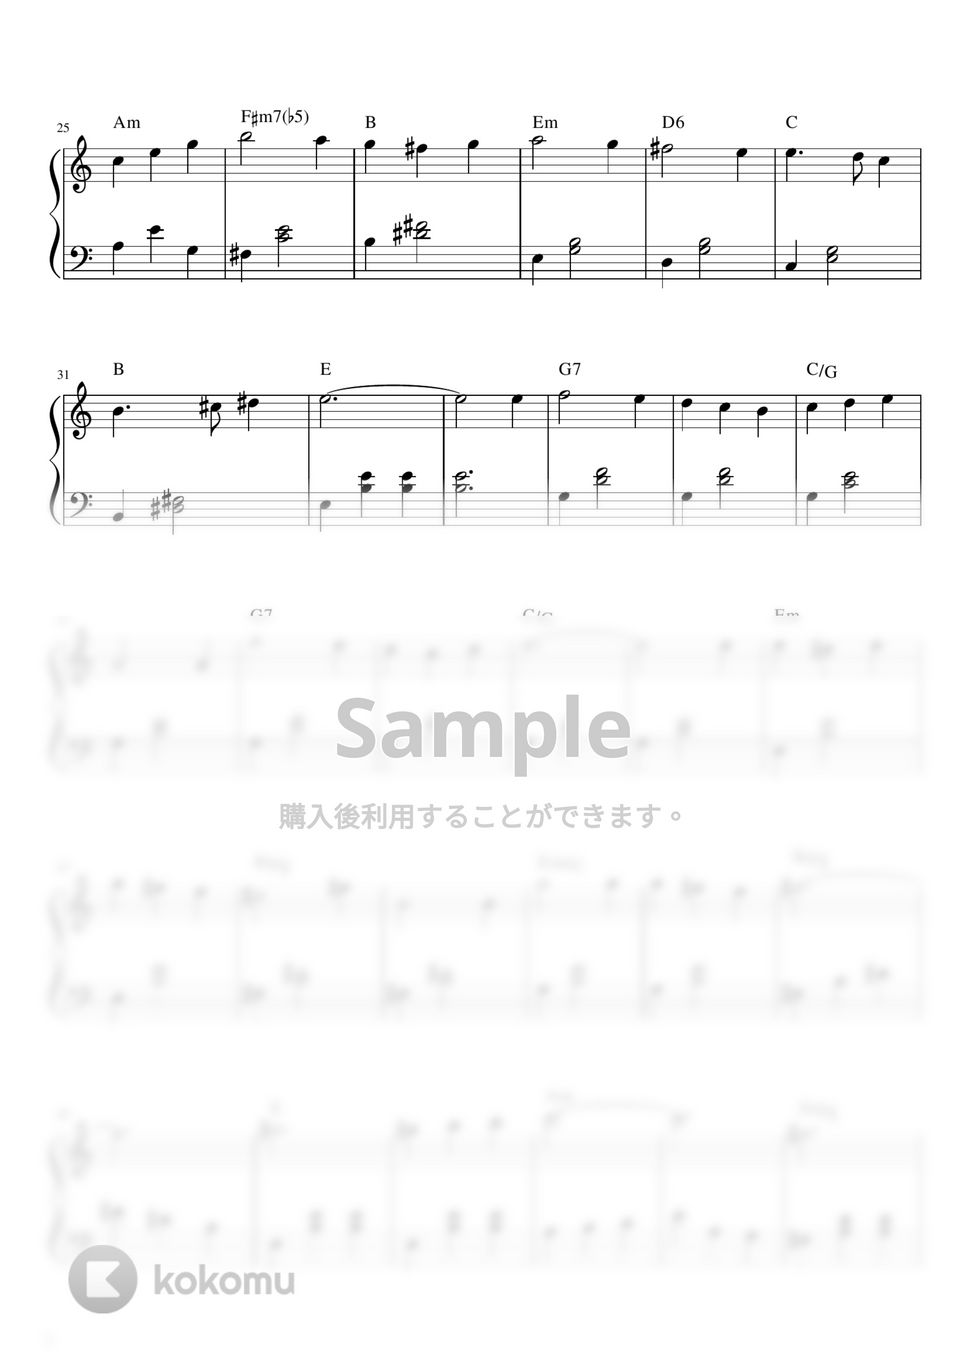 Hisaishi Joe - 生のメリ-ゴ-ランド(ハウルの動く城 OST) (easy ver. 인생의 회전목마) by Pichi Ahr